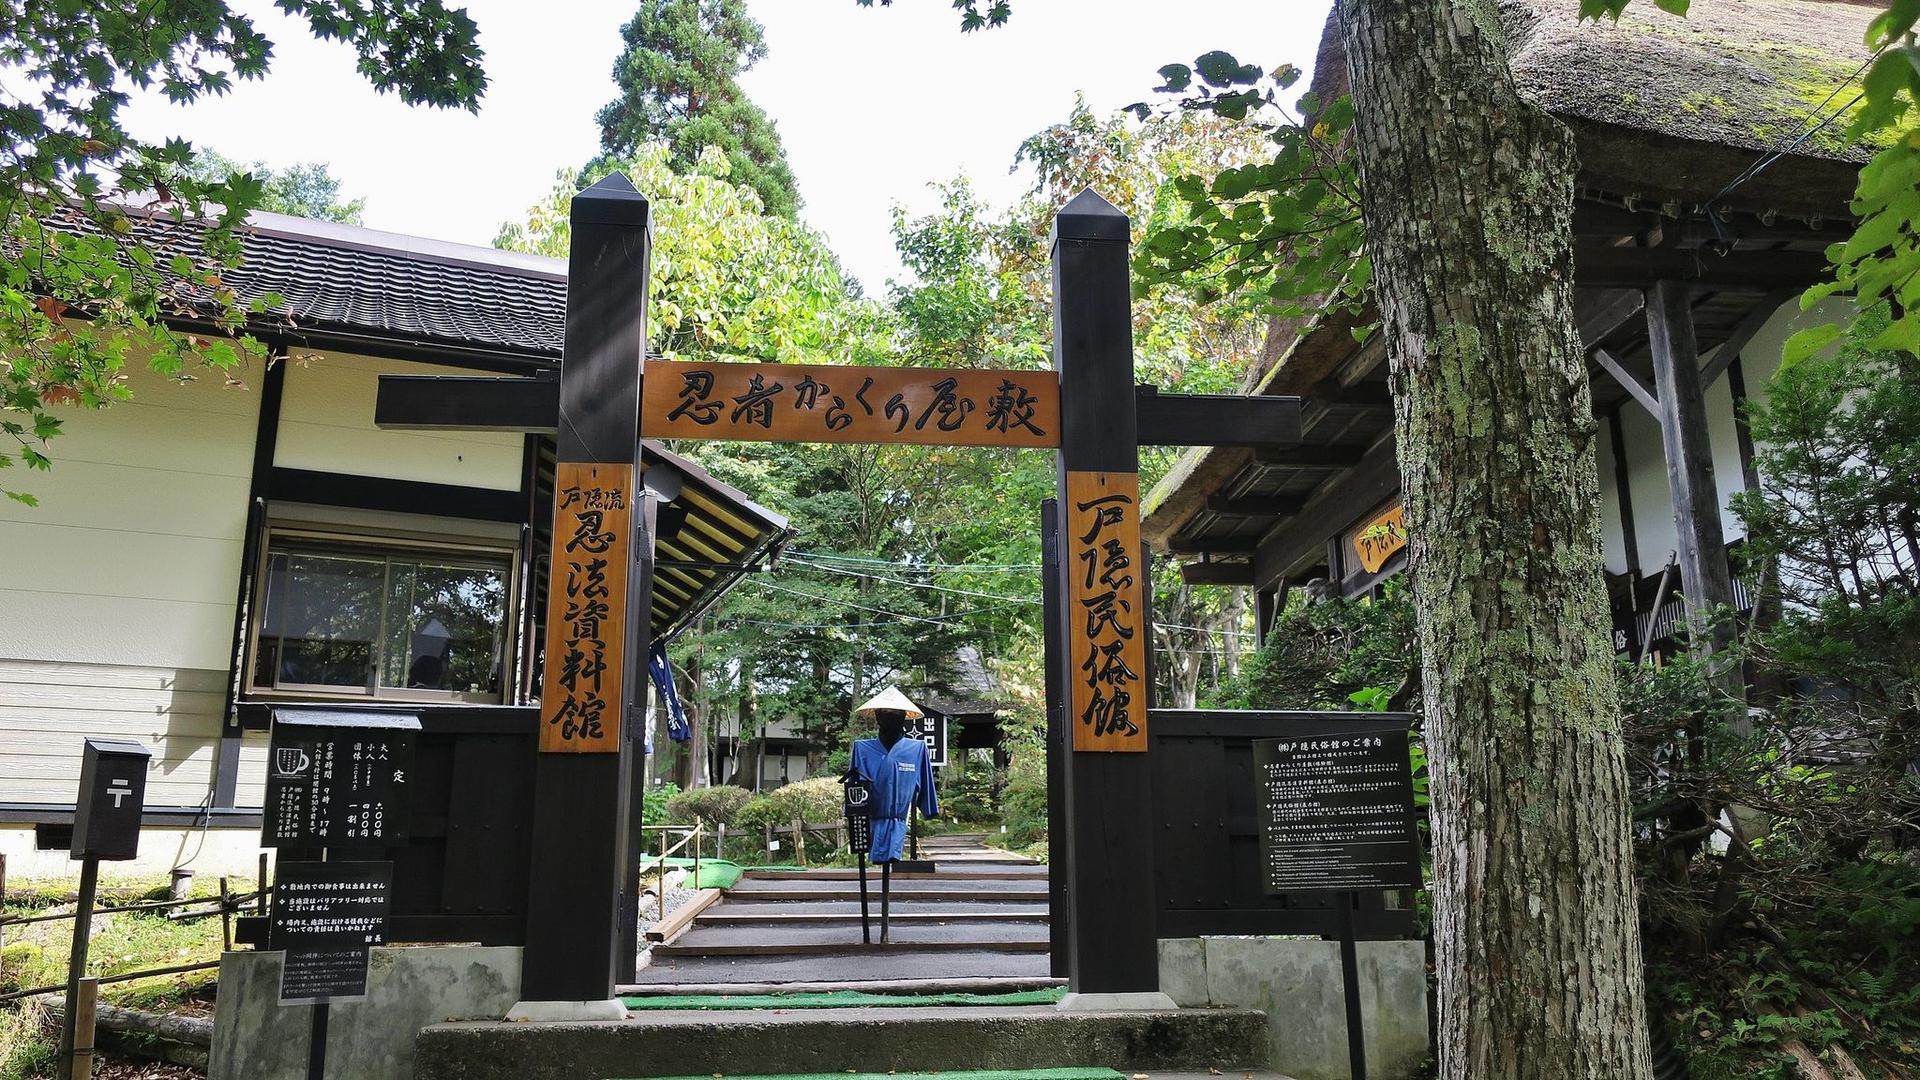 Togakushi Folk Museum・Togakushi Ninja Museum・Ninja Trick Mansion